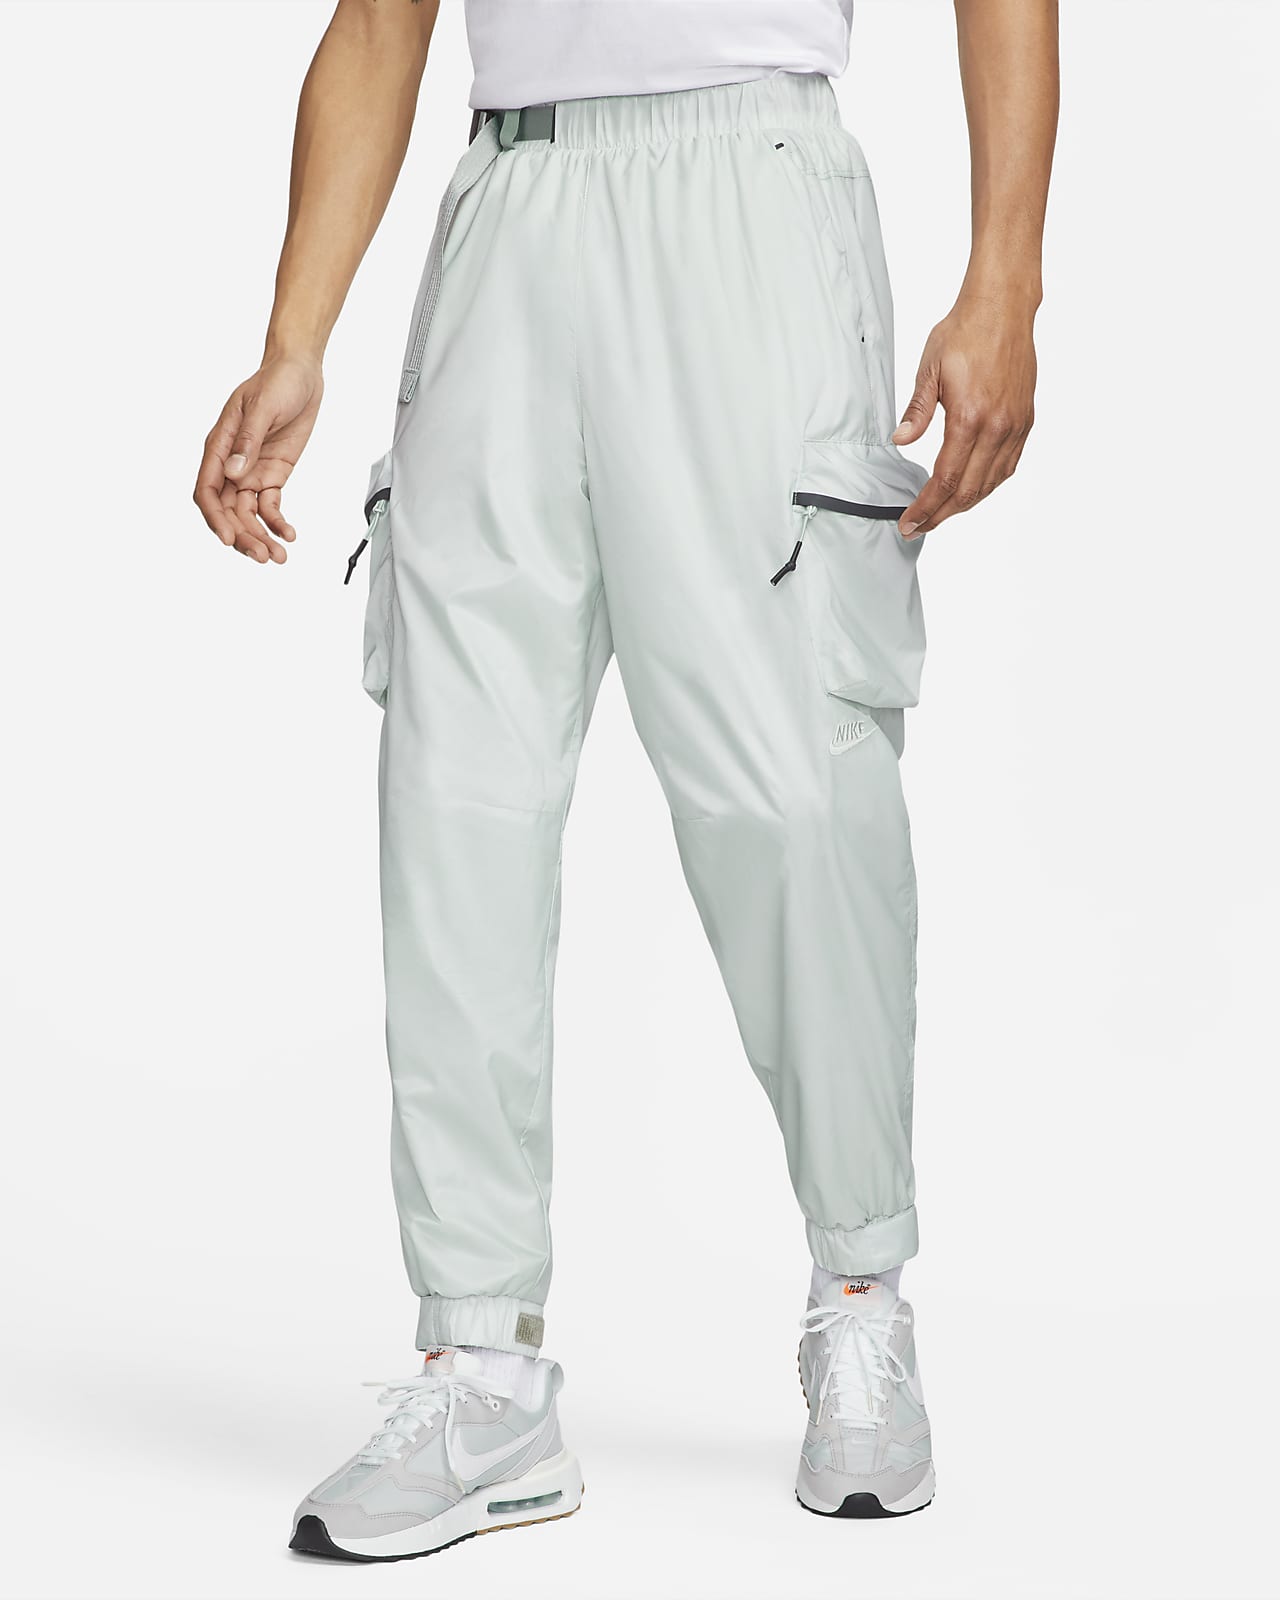 Nike Sportswear Repel Tech Pack Mens Lined Woven Pants Nikecom